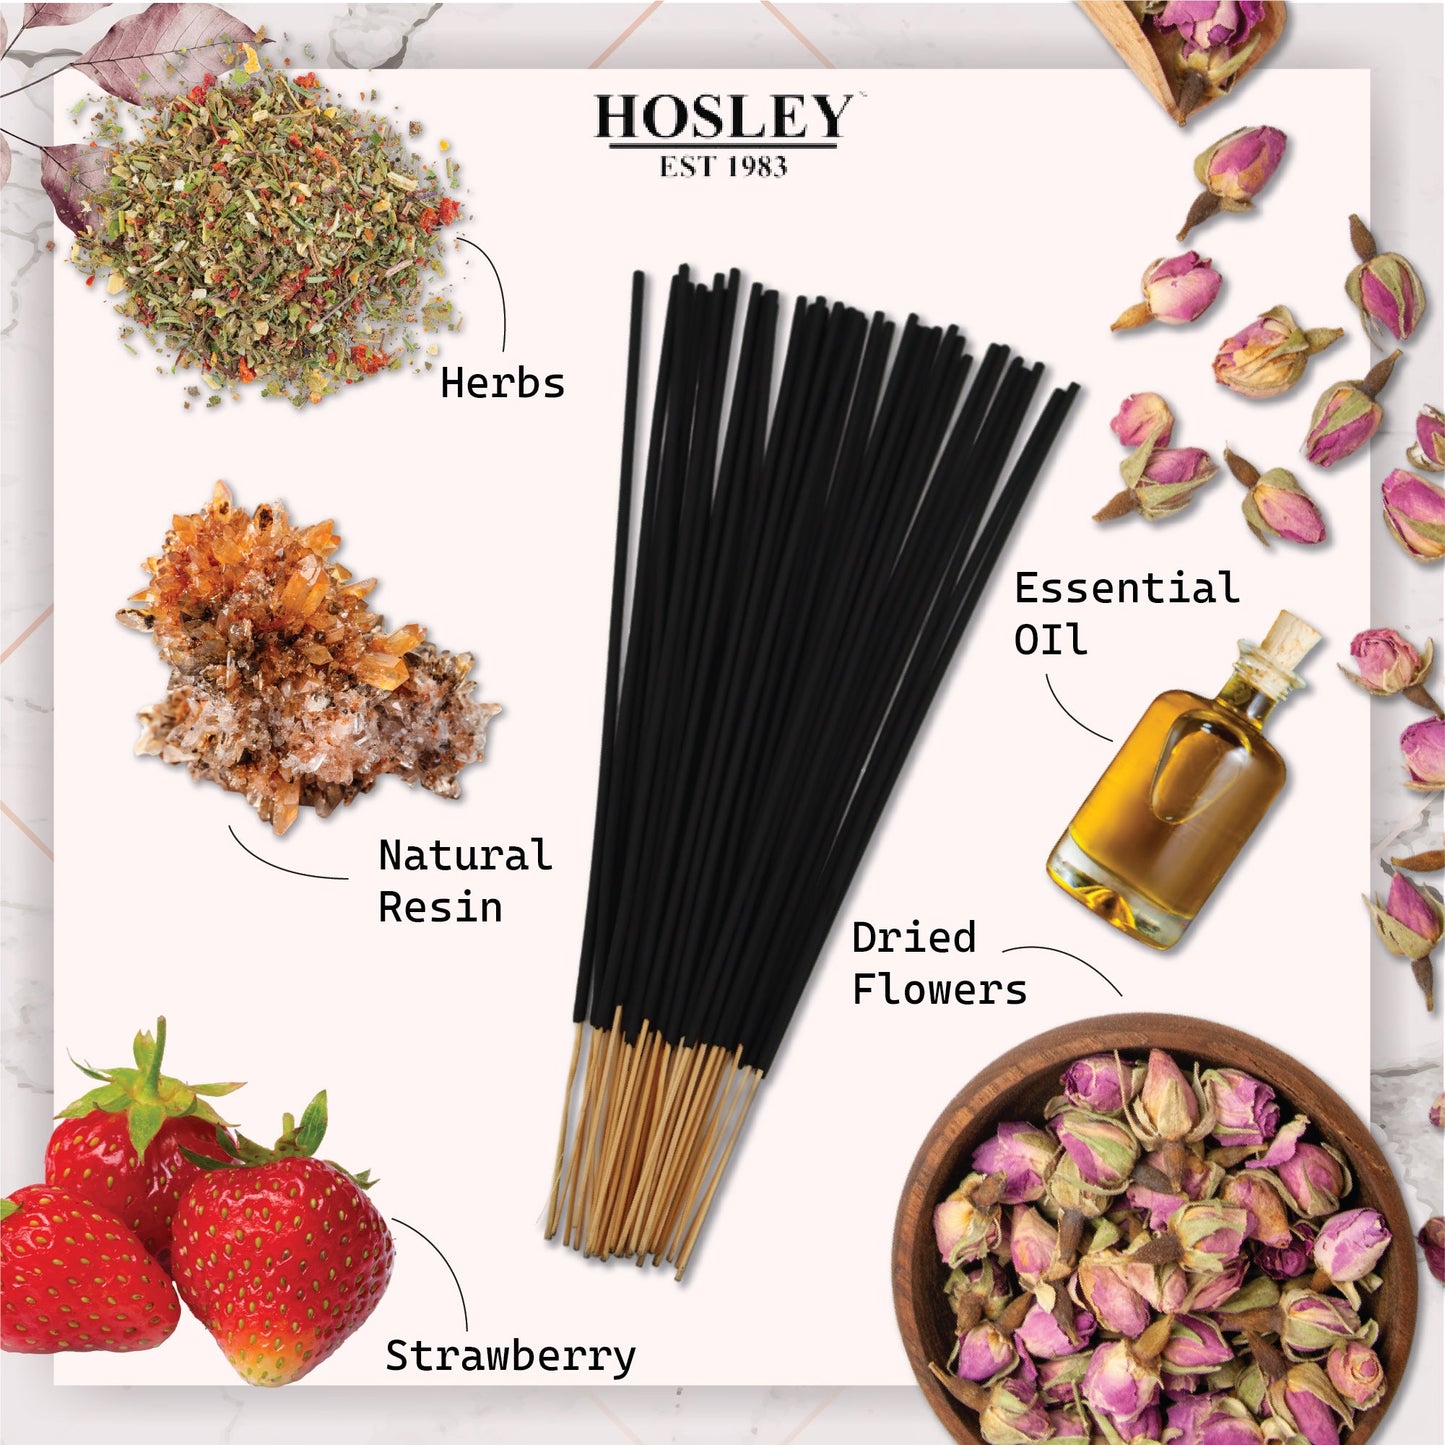 Hosley Strawberry Fragrance Incense Sticks